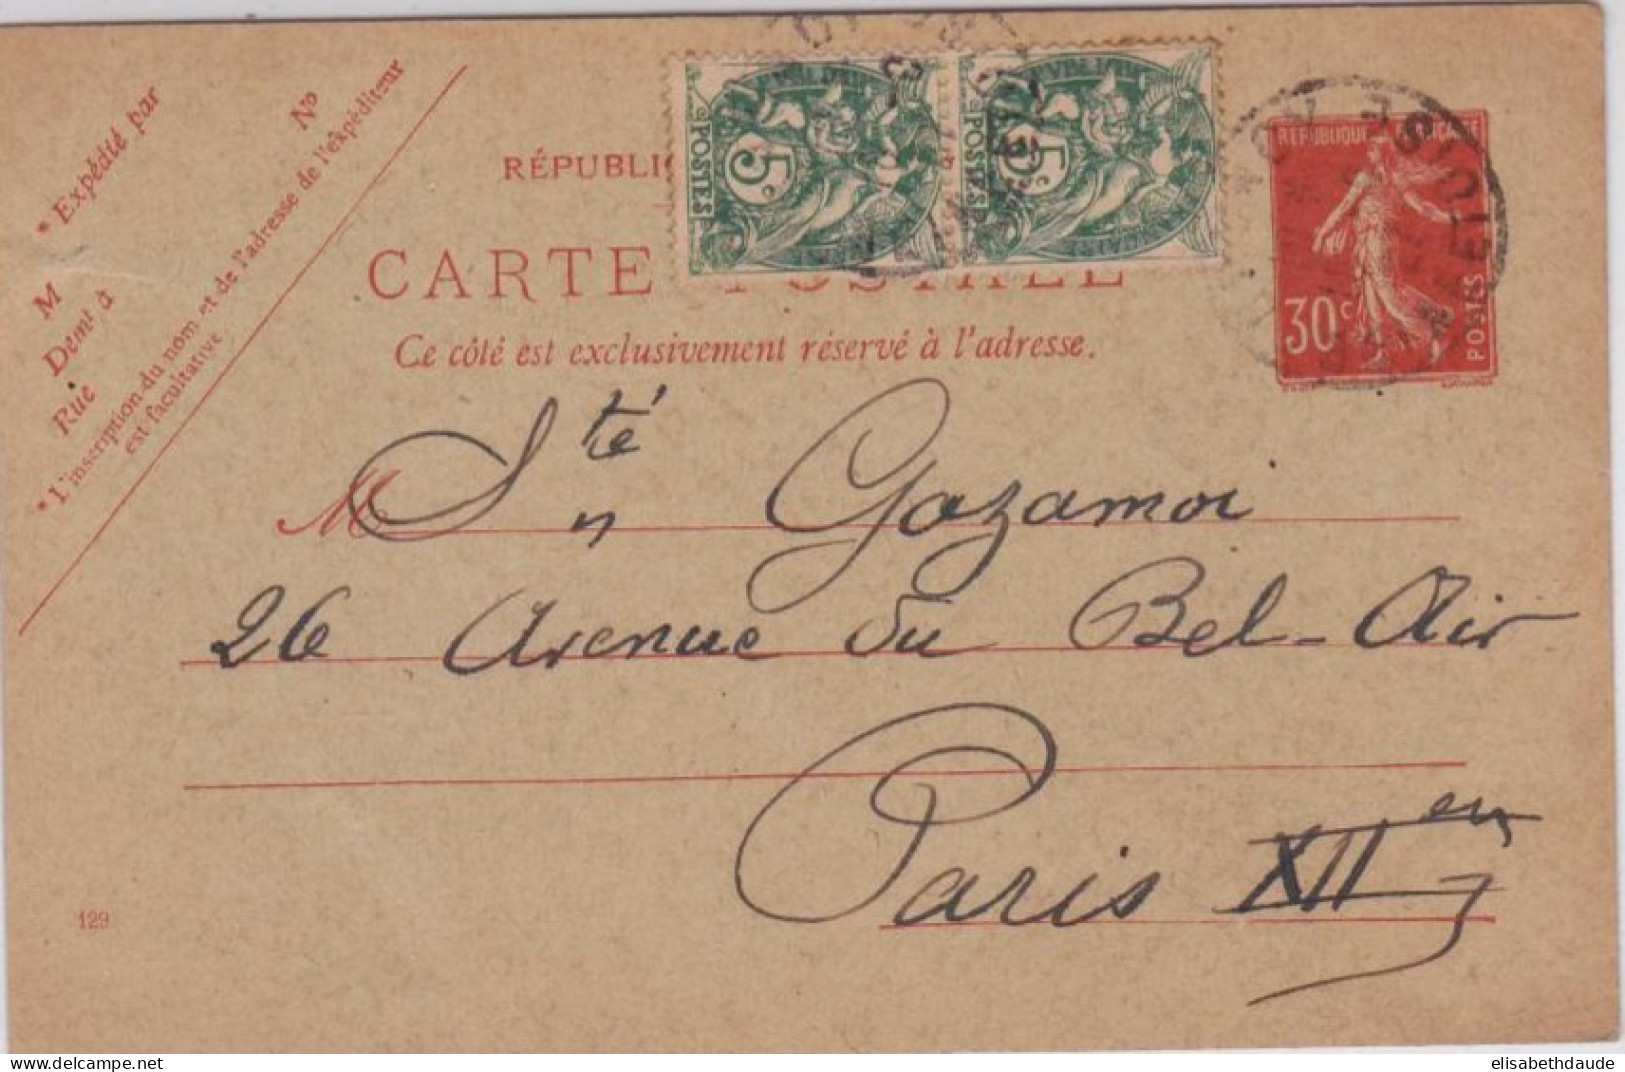 SEMEUSE CAMEE + BLANC - CARTE POSTALE ENTIER - 1927 - REPIQUAGE RARE BRUNOY (FLEURISTE) - DATE :129 - Overprinter Postcards (before 1995)